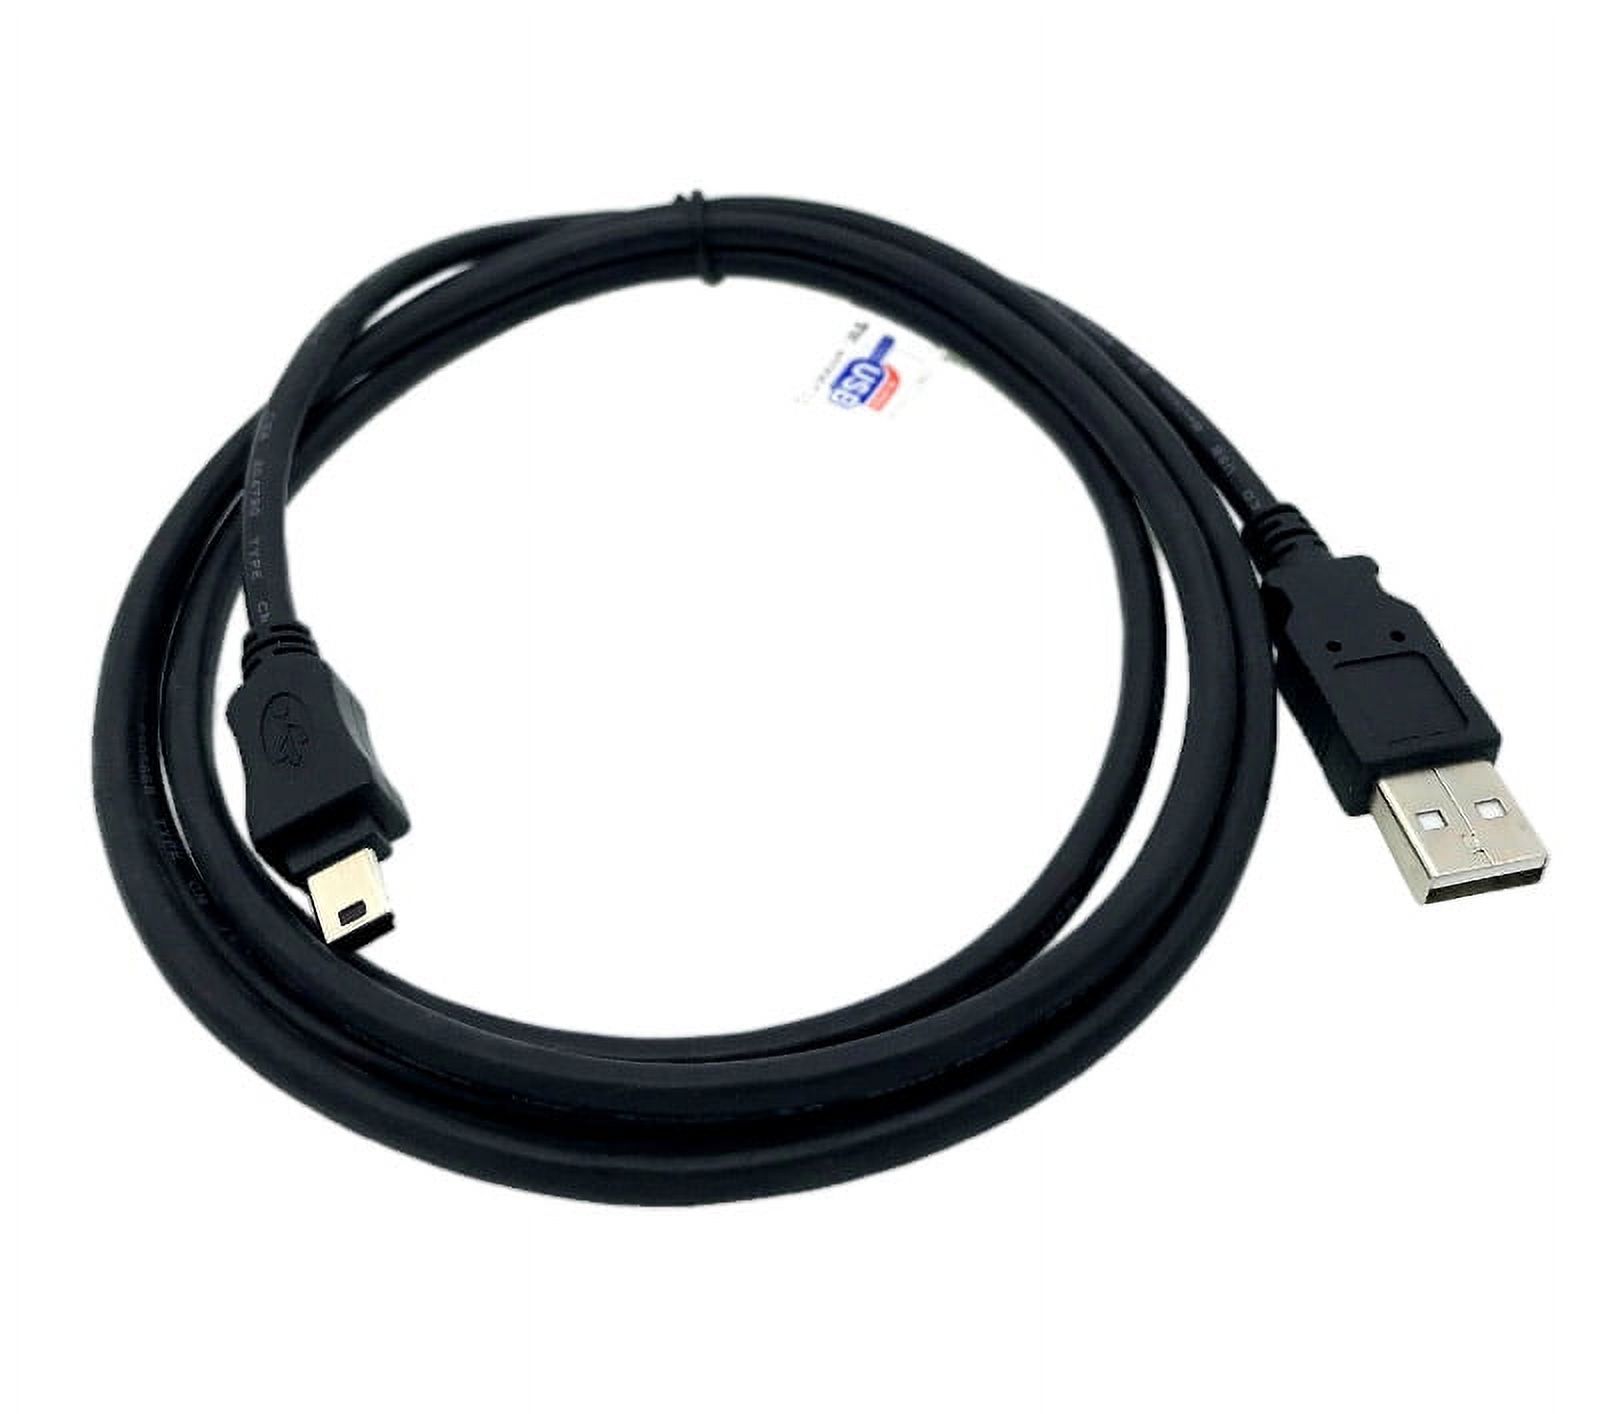 Kentek 6 Feet FT USB SYNC Cord Cable For MAGELLAN ROADMATE 300 360 700 760 800 860 860T 1220 Portable GPS - image 1 of 1